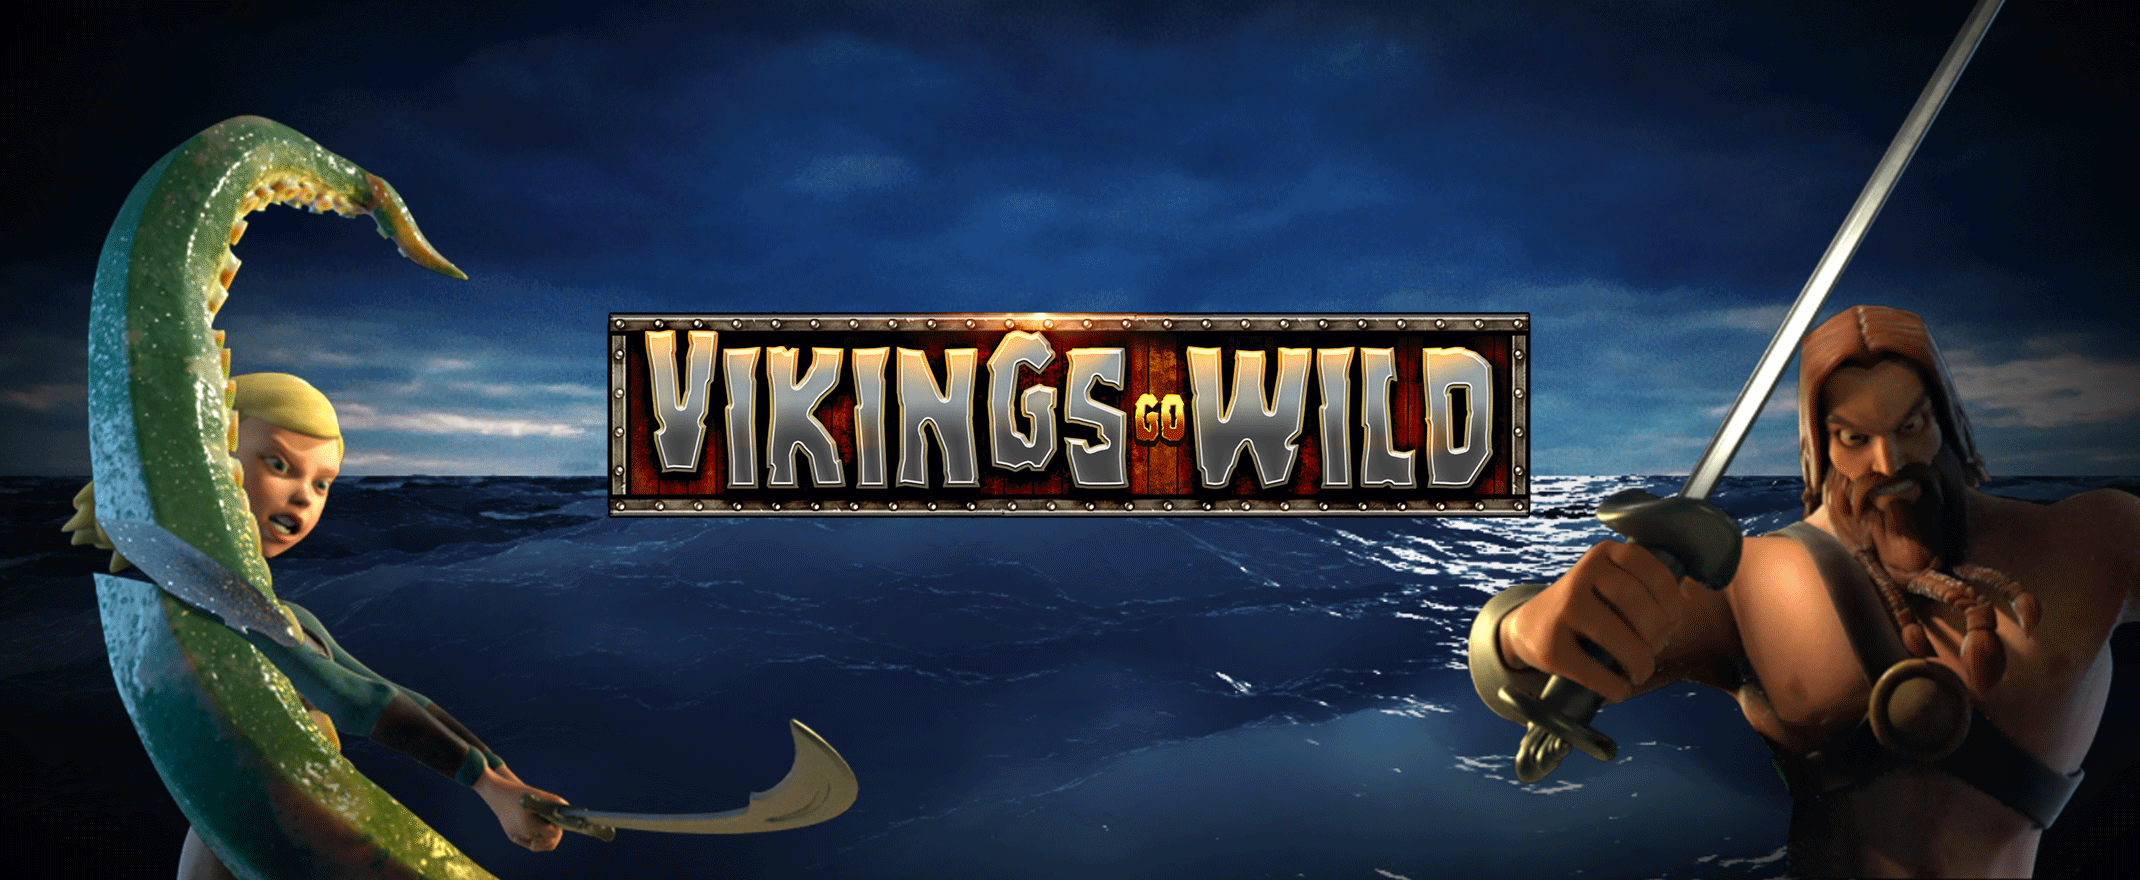 vikings go wild logo